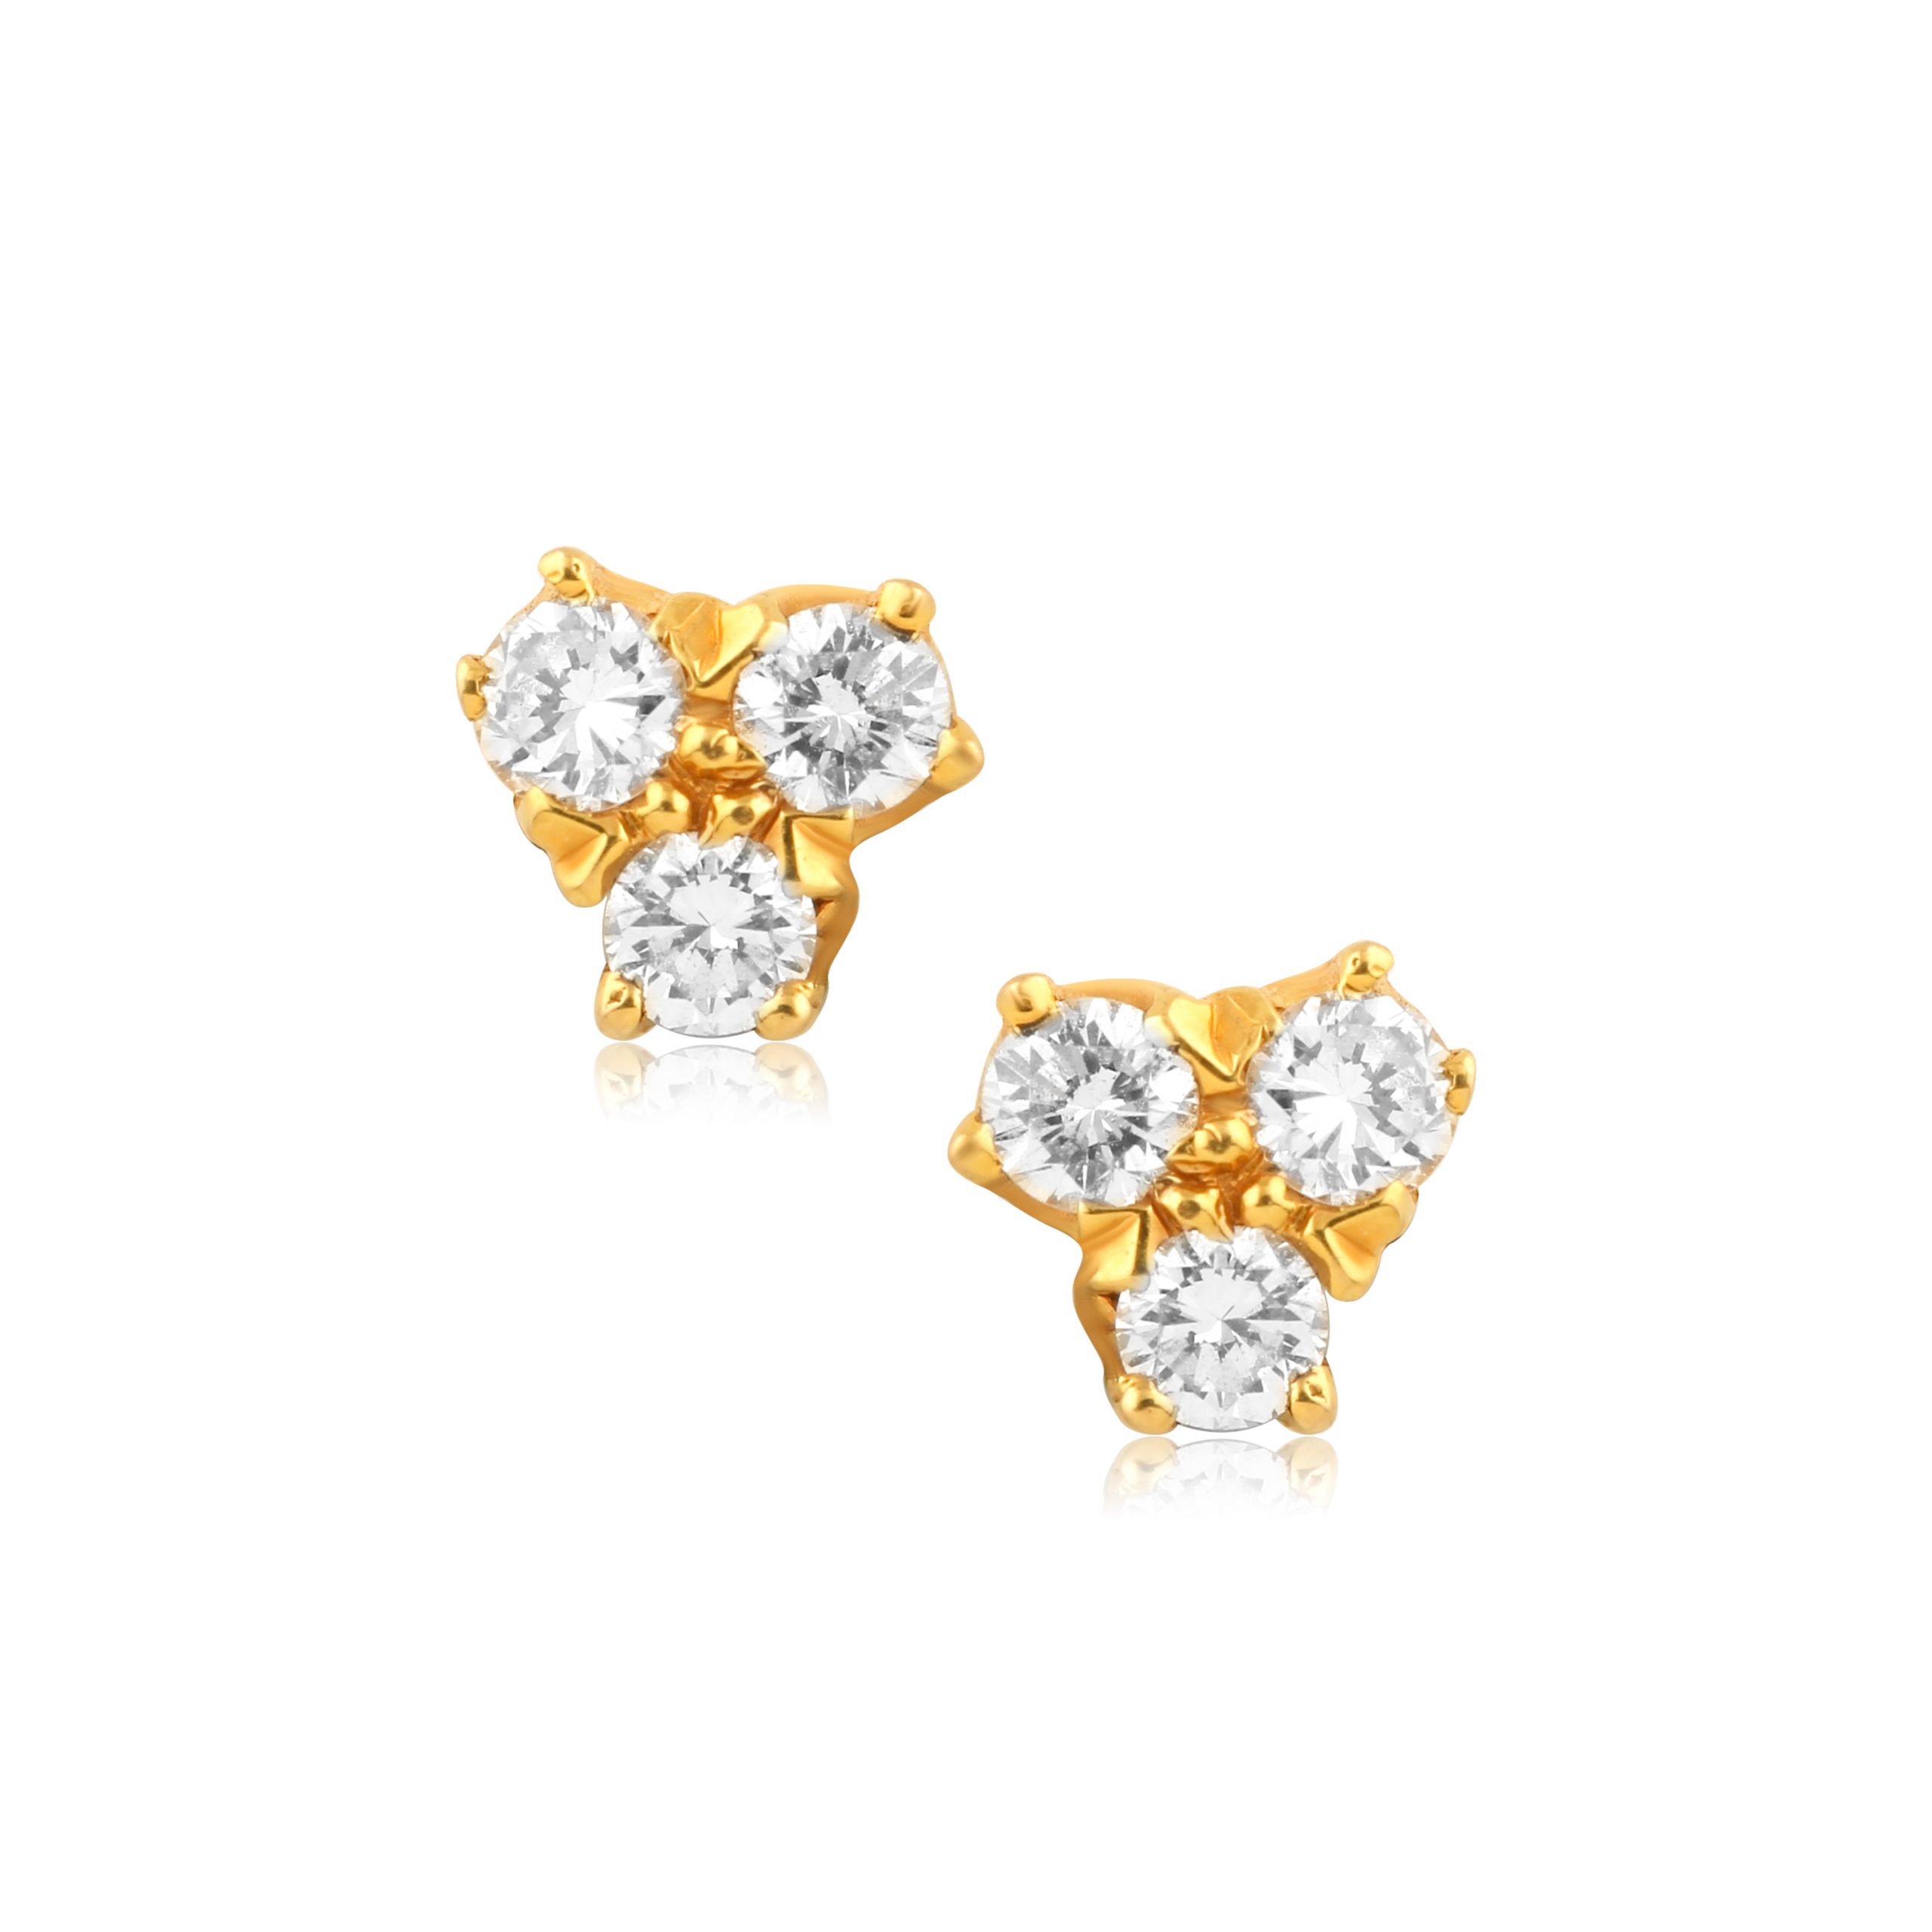 Contemporary 18 Karat Gold & Diamond Stud Earrings